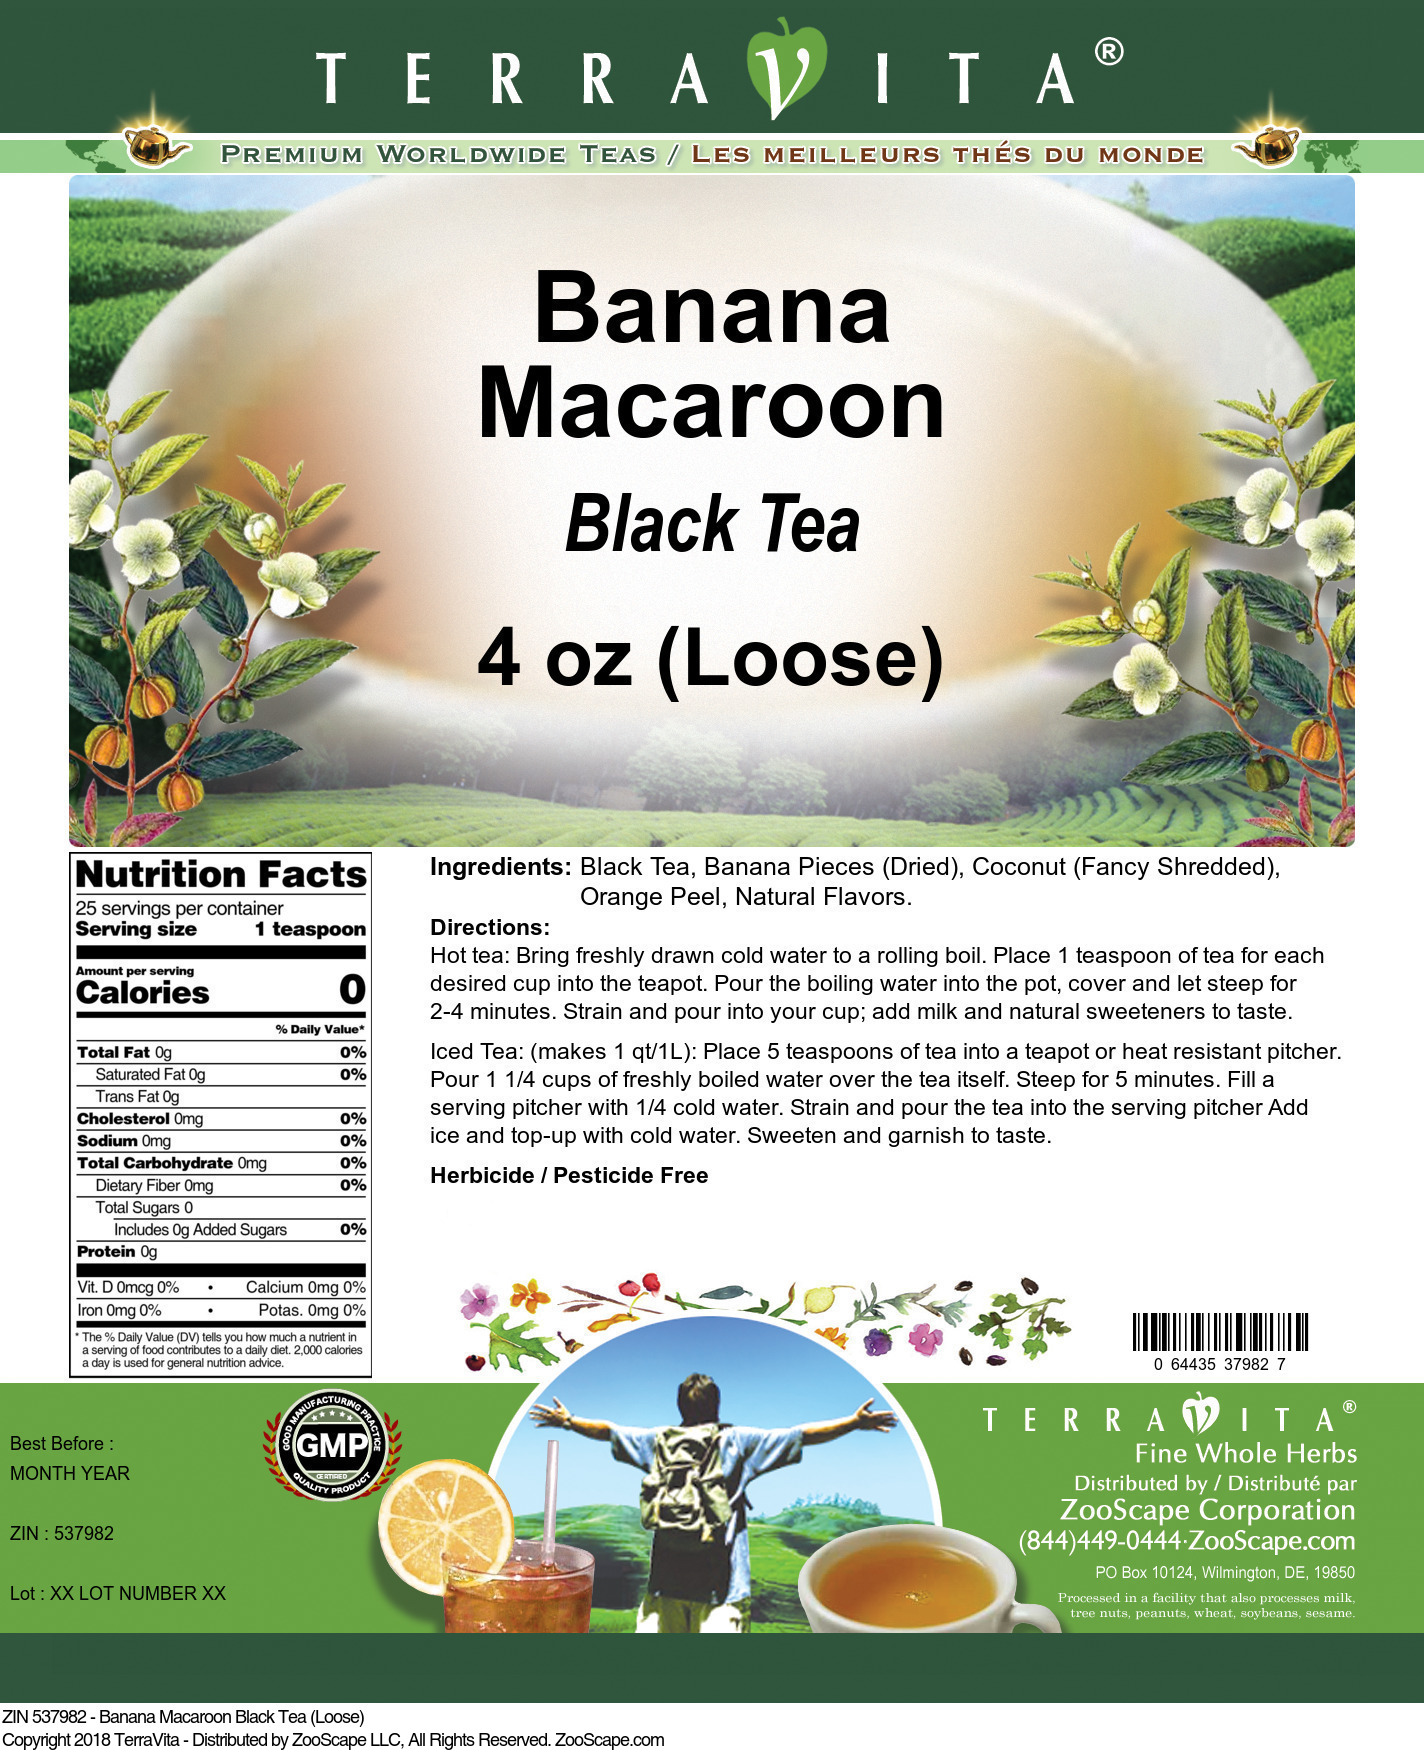 Banana Macaroon Black Tea (Loose) - Label